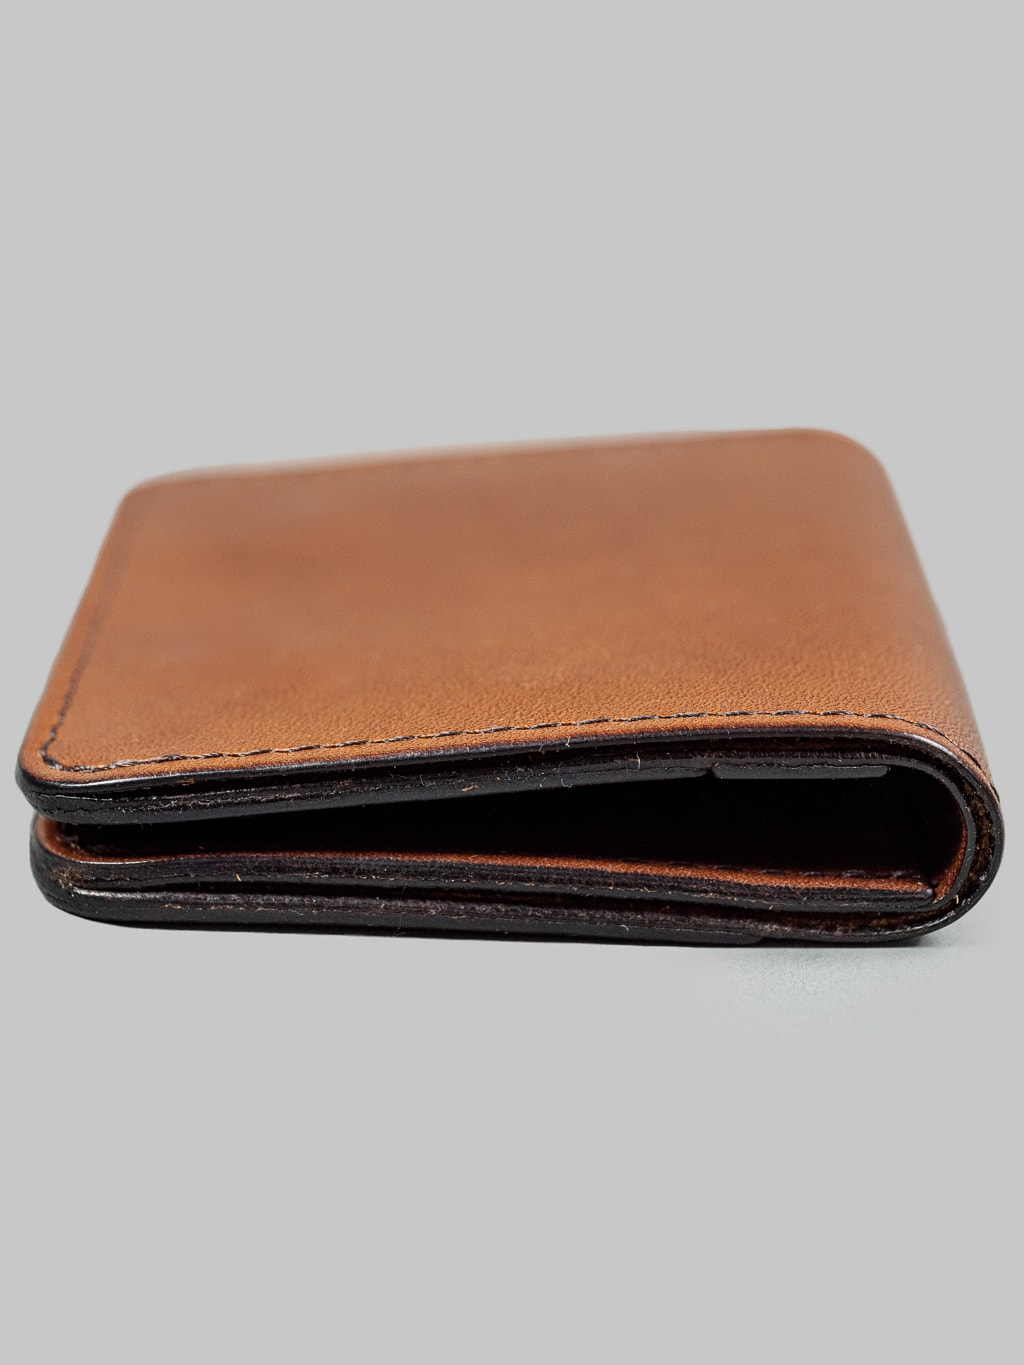 Studio Dartisan brown leather mini wallet side view